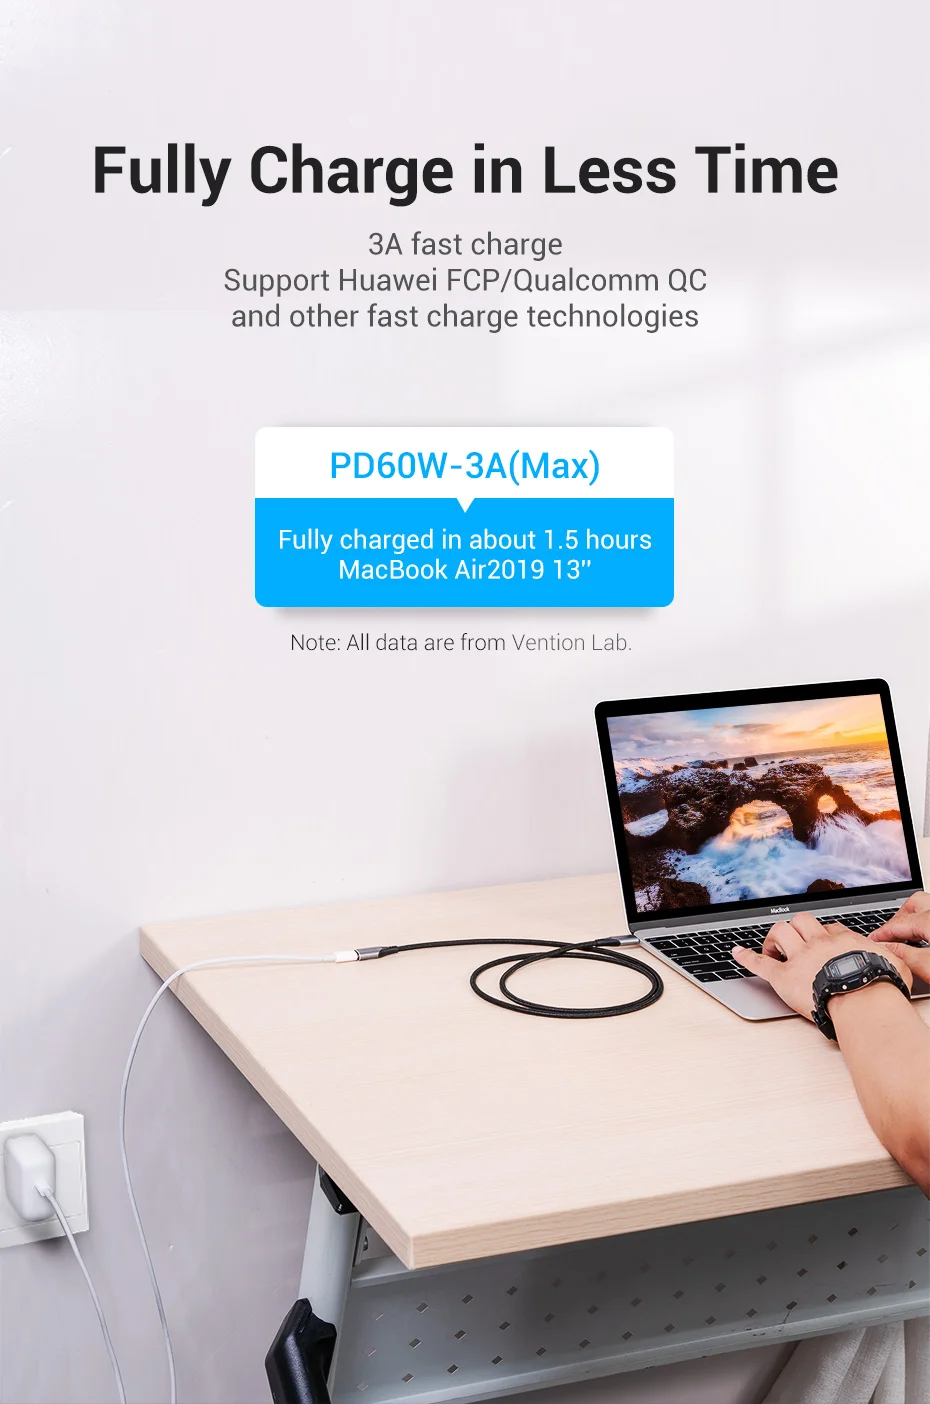 HYFAI – Câble de rallonge USB-C mâle vers femelle SuperSpeed de 1 pi (3A)  compatible avec MacBook Pro, Samsung, etc., noir